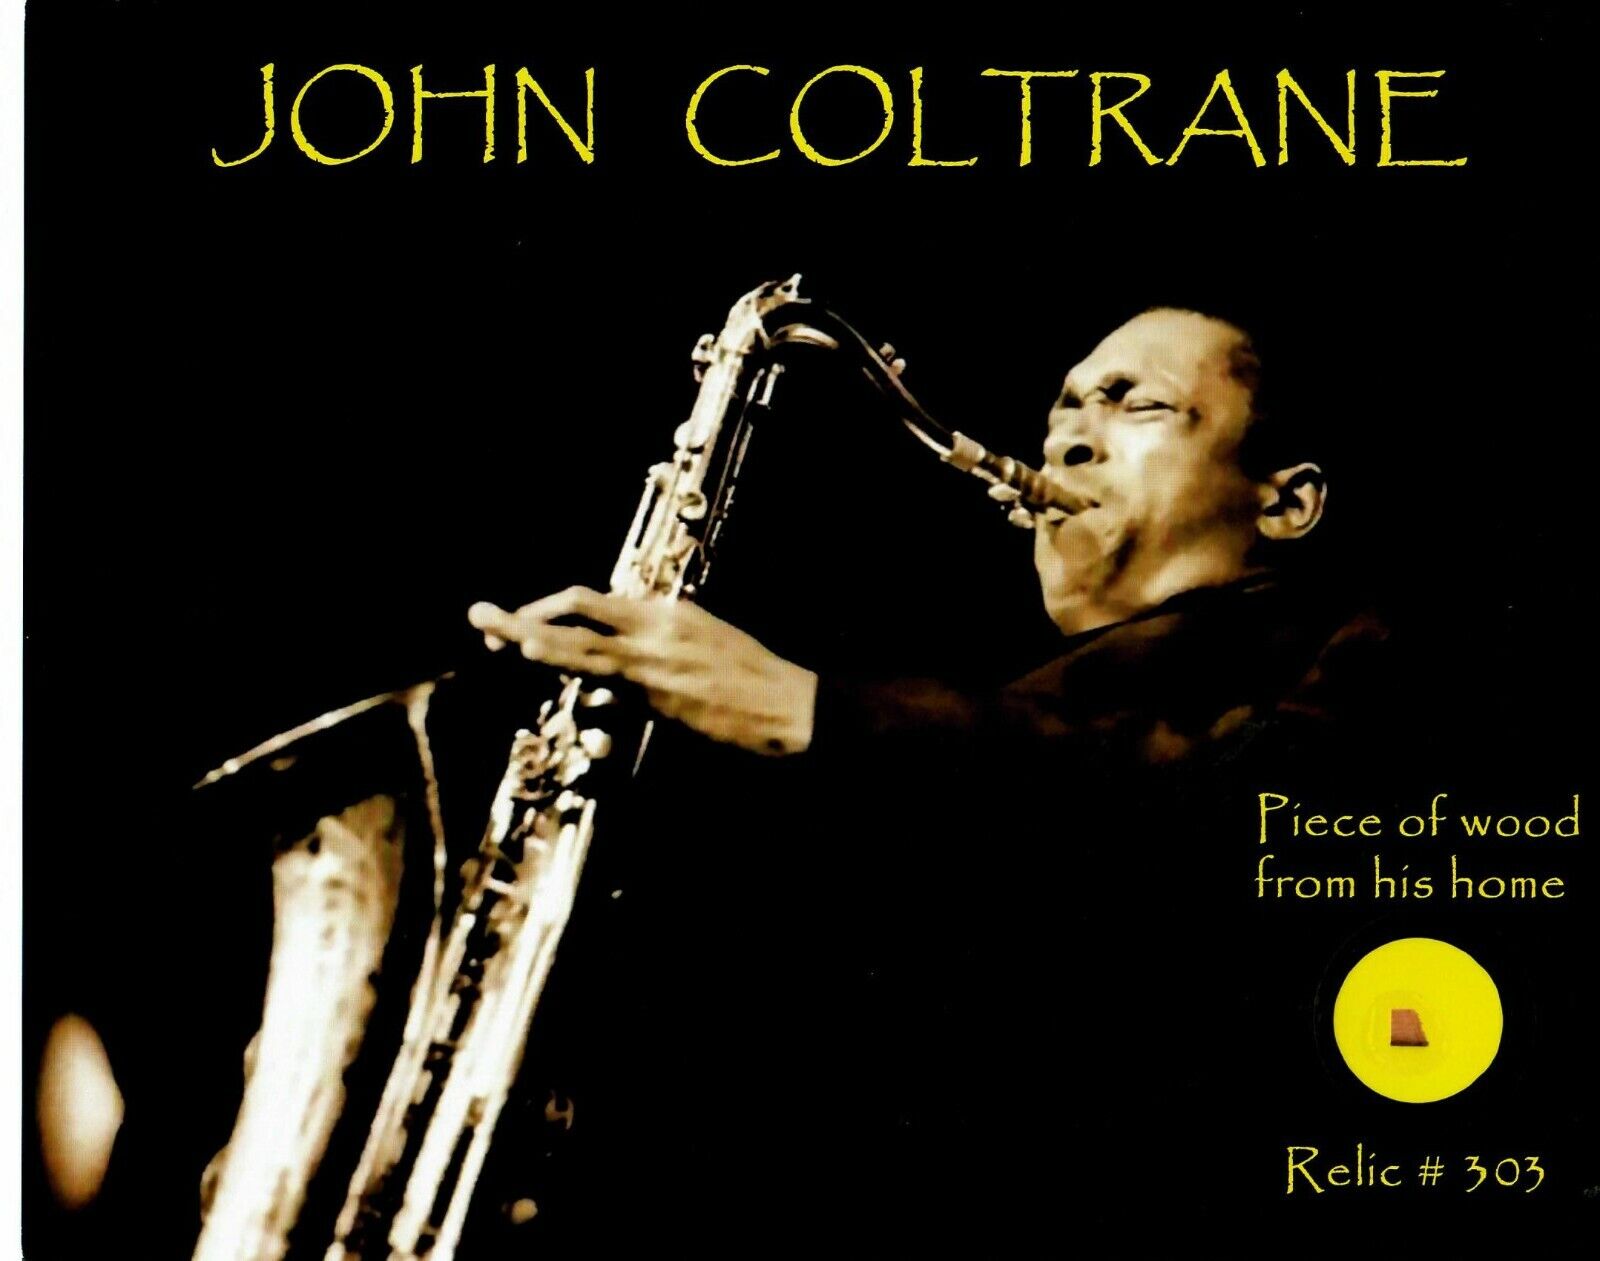 RARE “John Coltrane